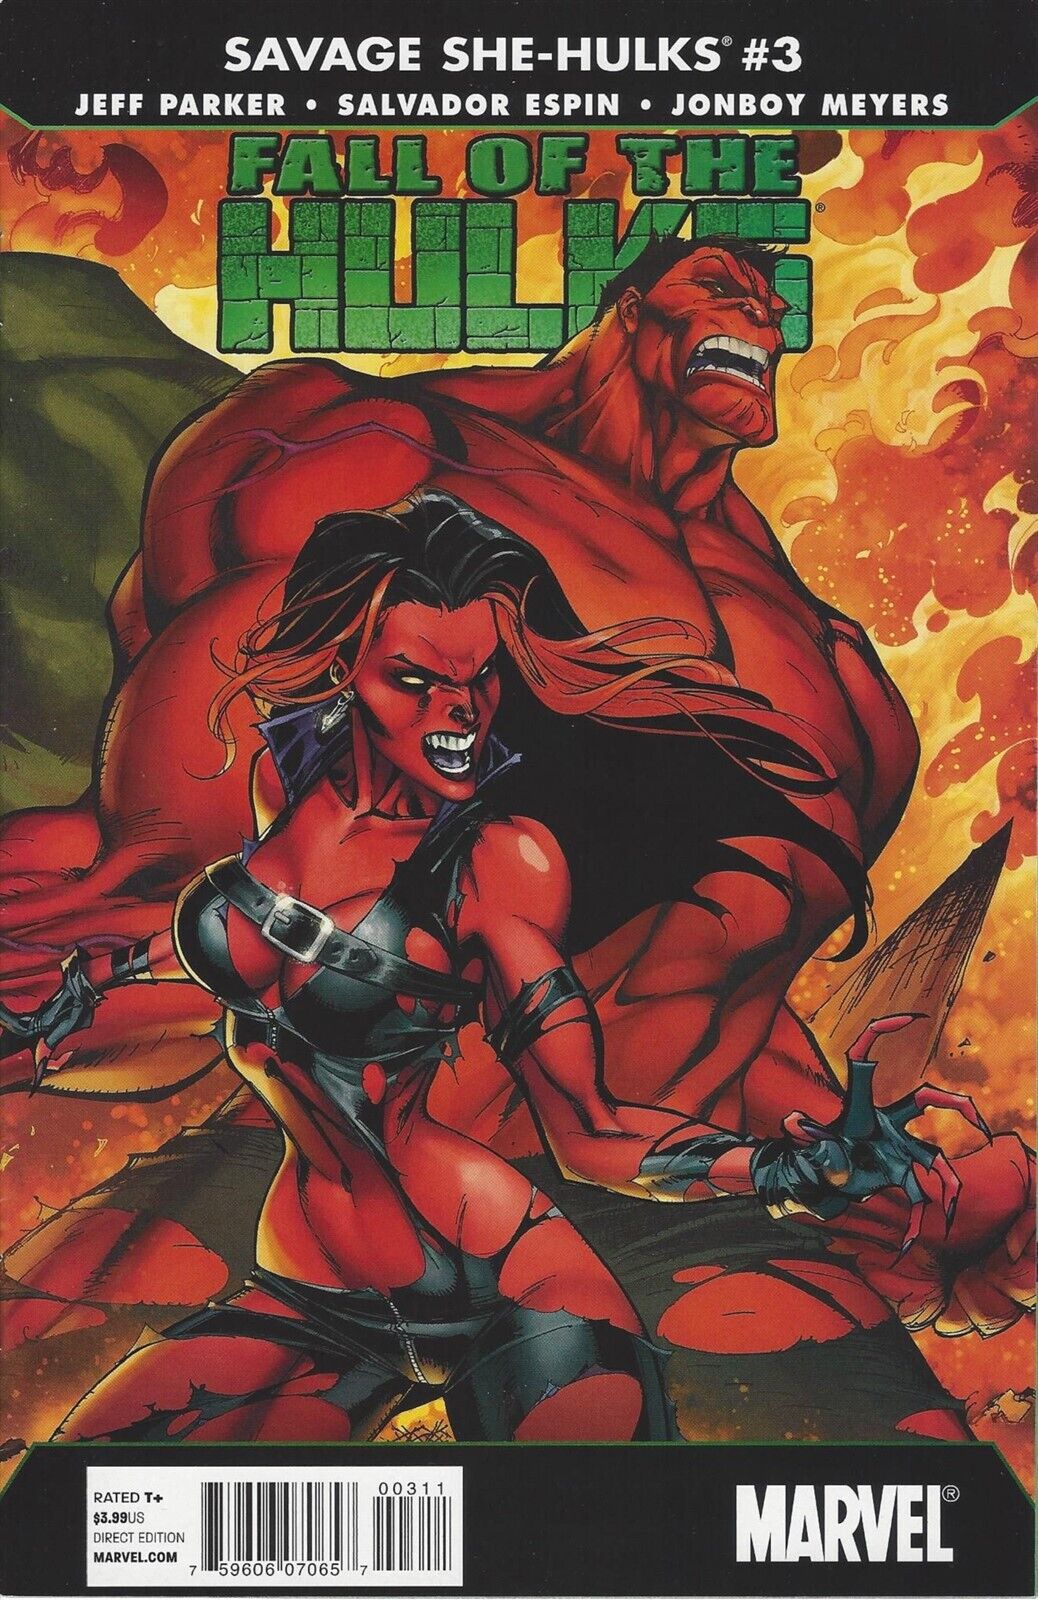 Fall of the Hulks: The Savage She-Hulks #3A Previously on Fall of the Hulks